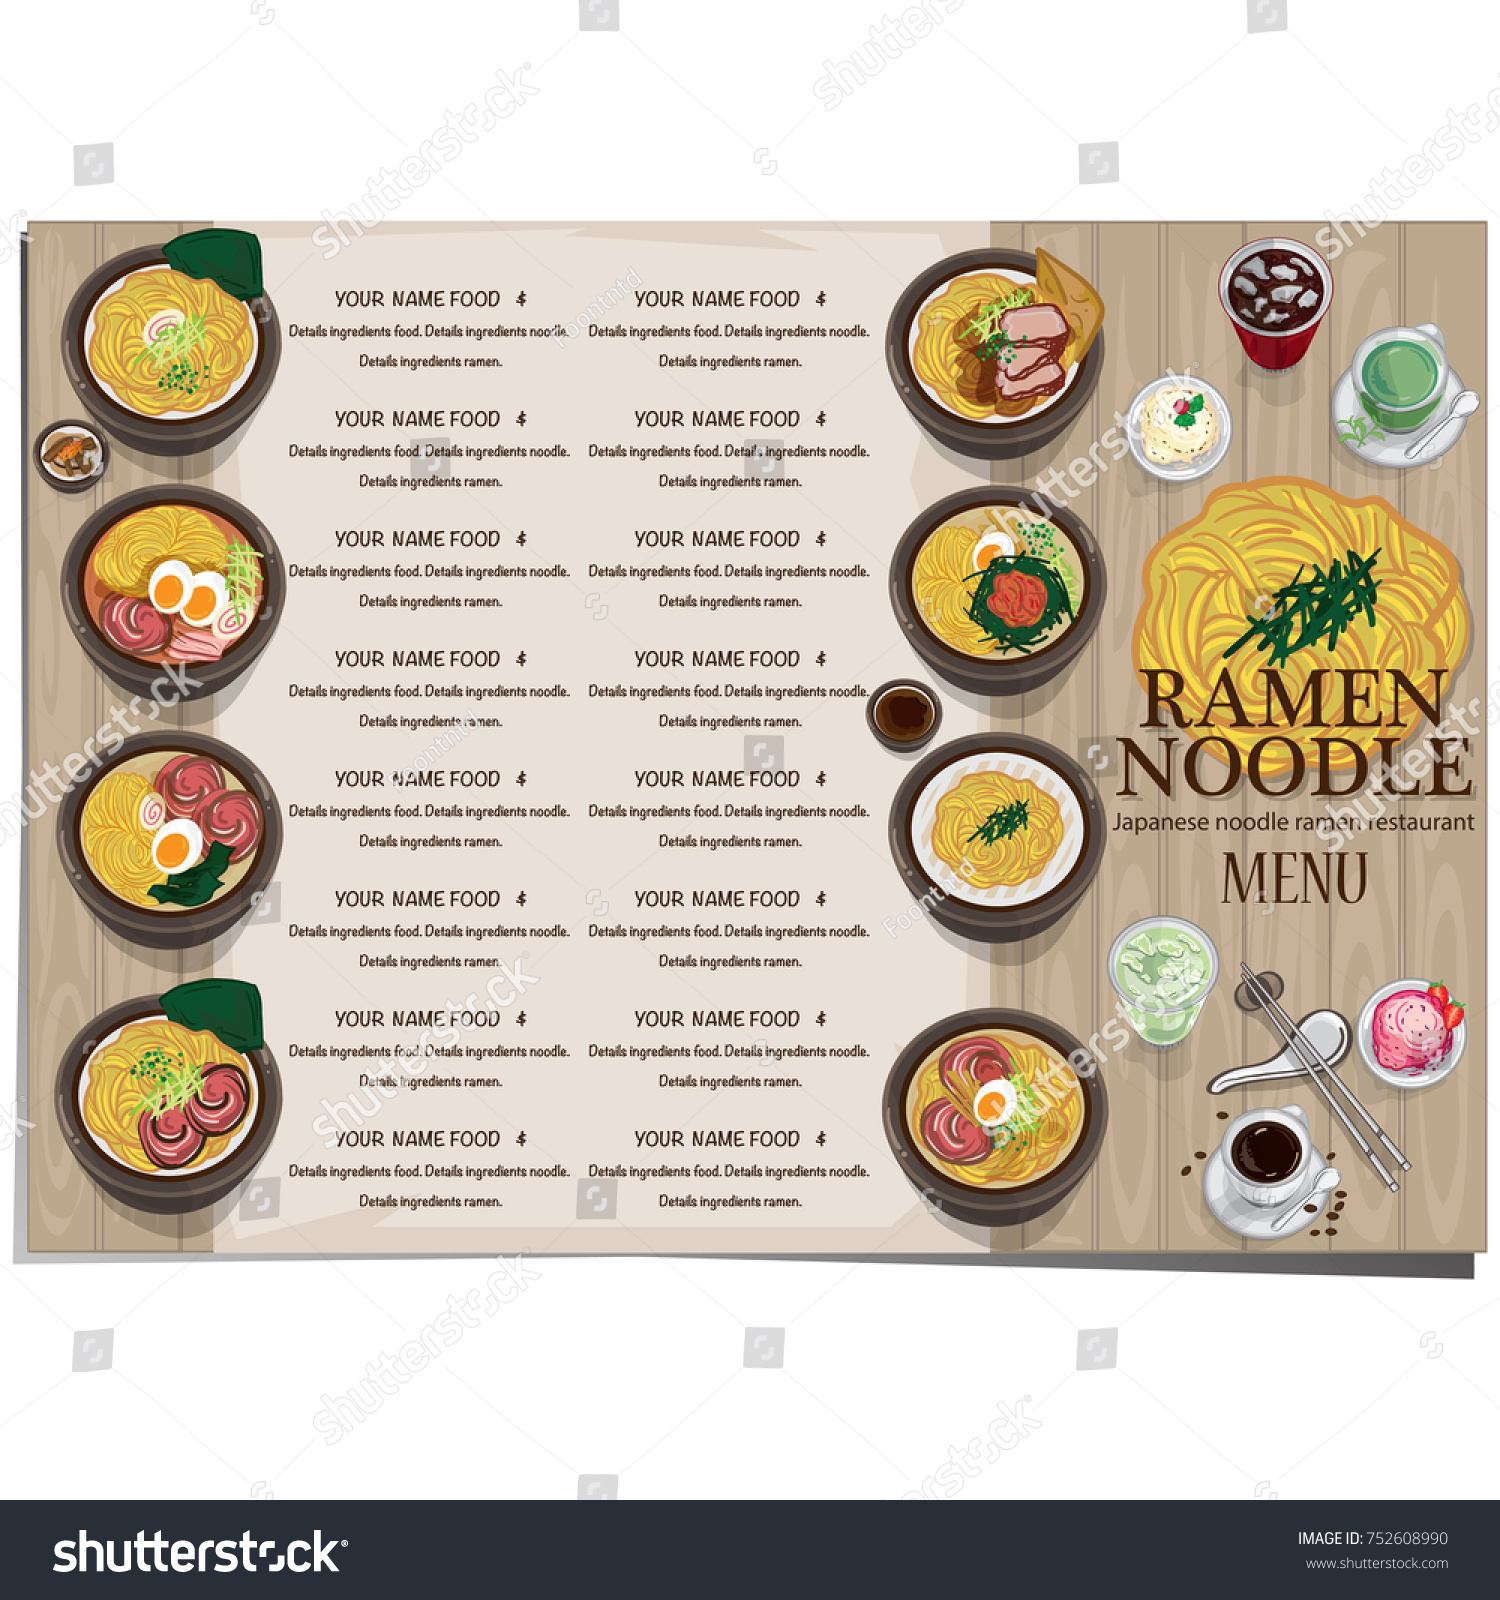 Menu Ramen Noodle Japanese Food Template Stock Vector Royalty Free